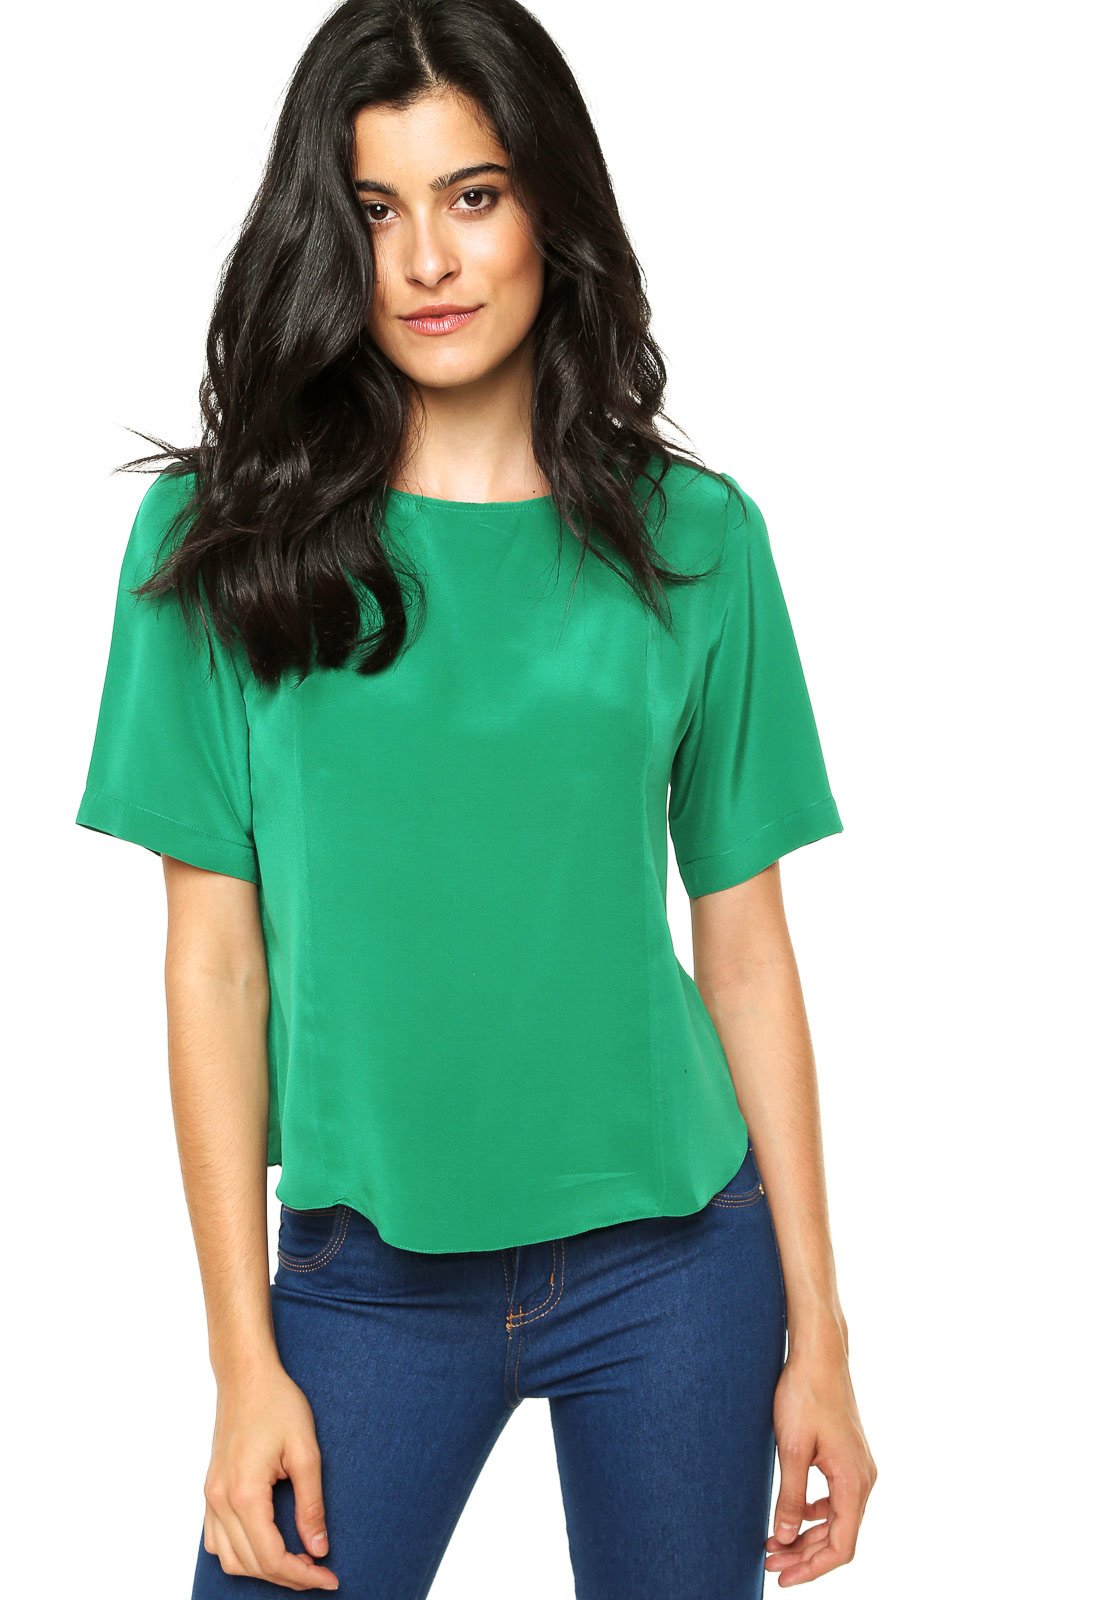 modelos de blusas verdes